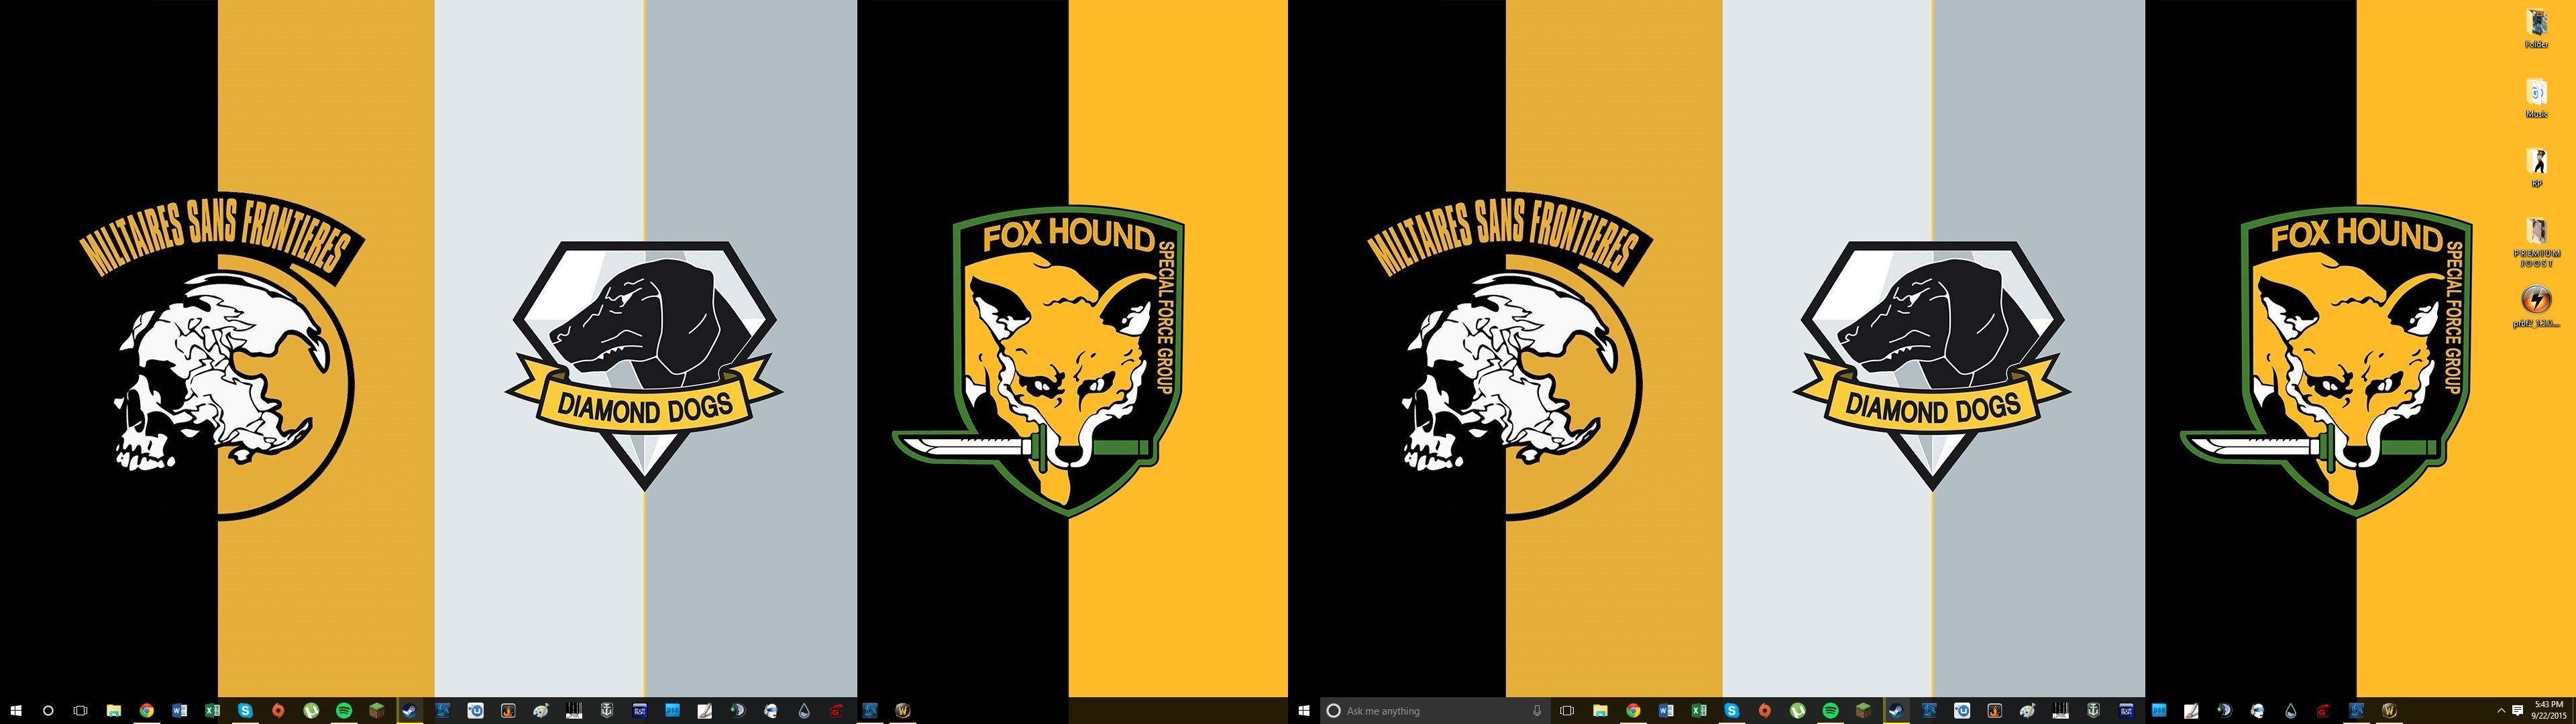 Foxhound Logo Wallpaper References